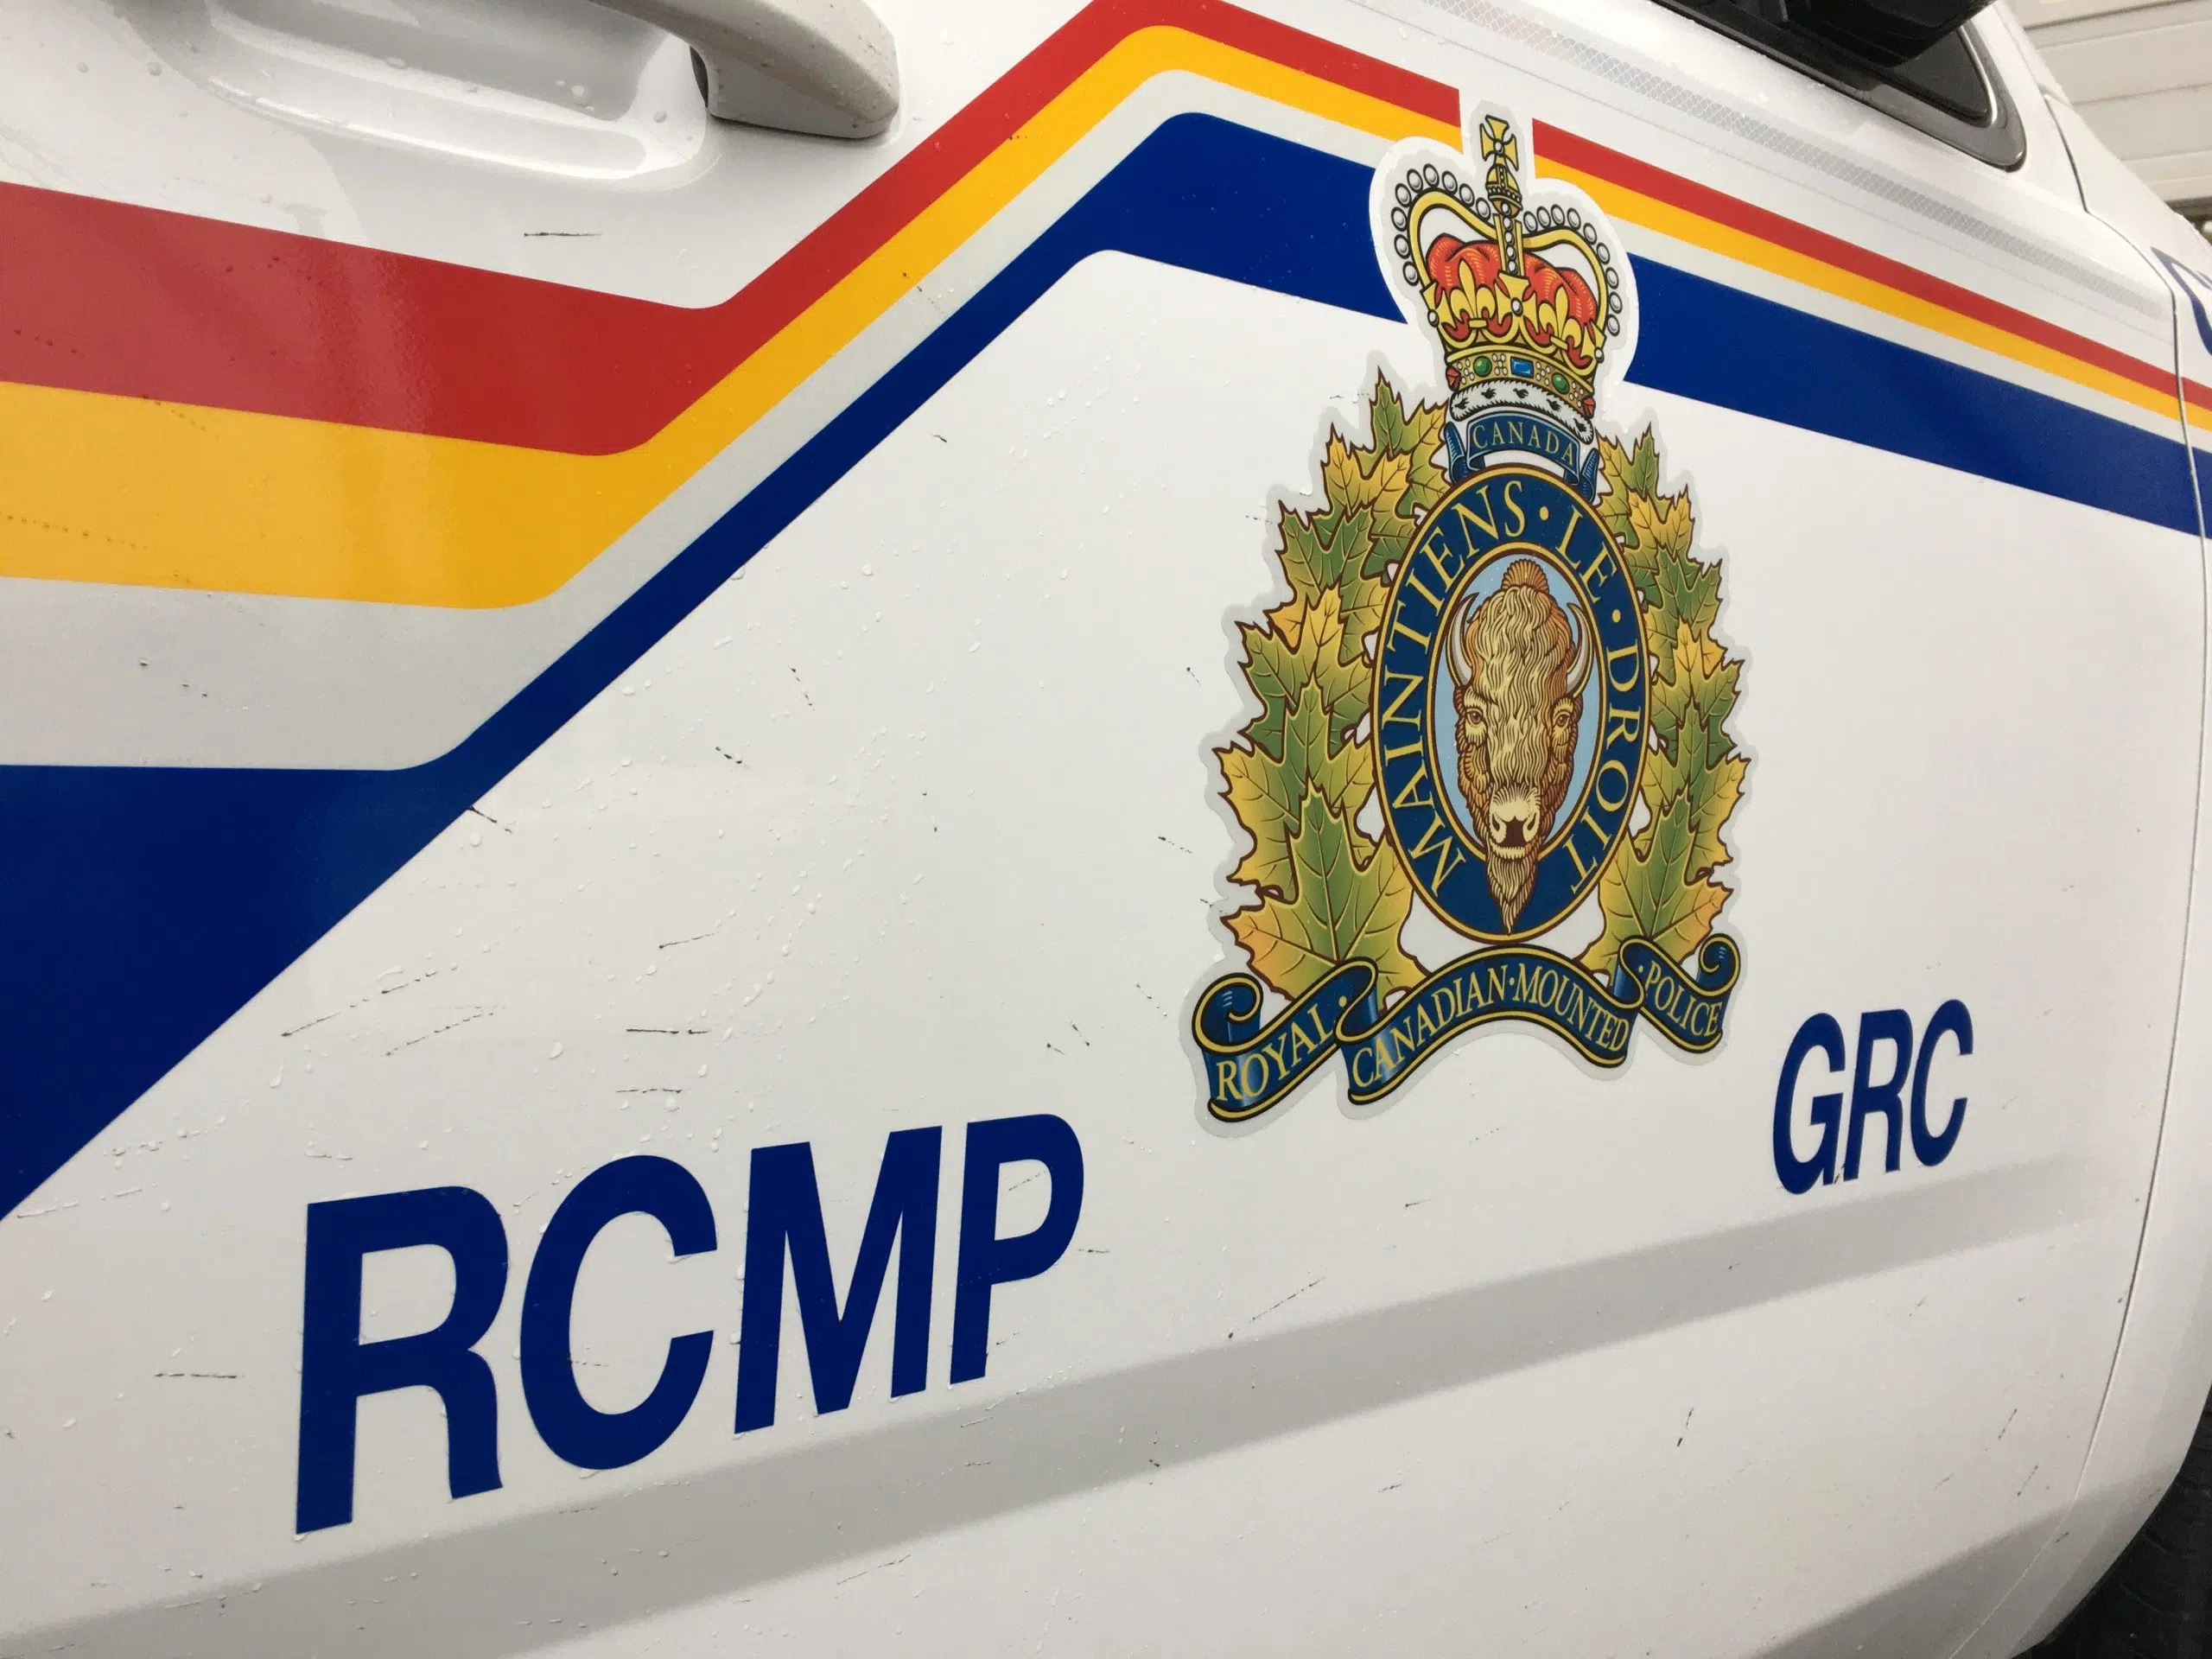 Stolen vehicle leads Kamloops RCMP to seize shotgun from Valleyview motel room